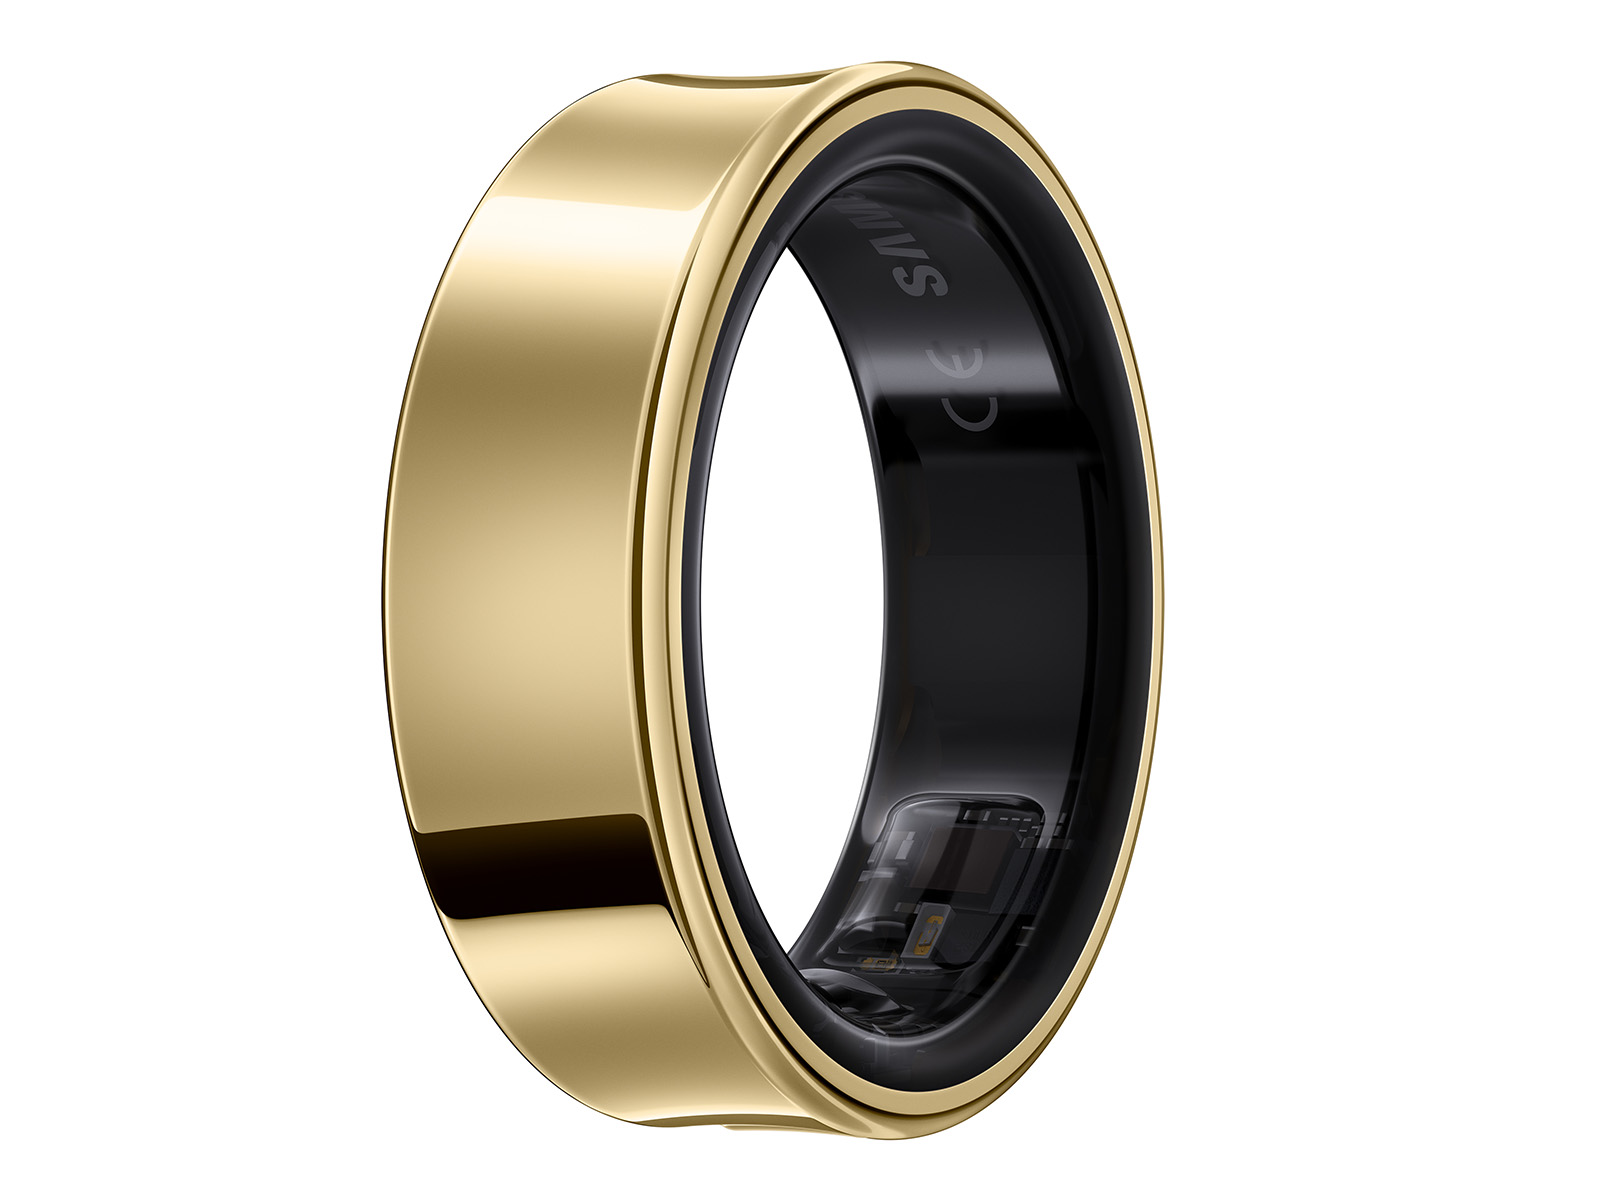 Thumbnail image of Galaxy Ring, Size 9, Titanium Gold